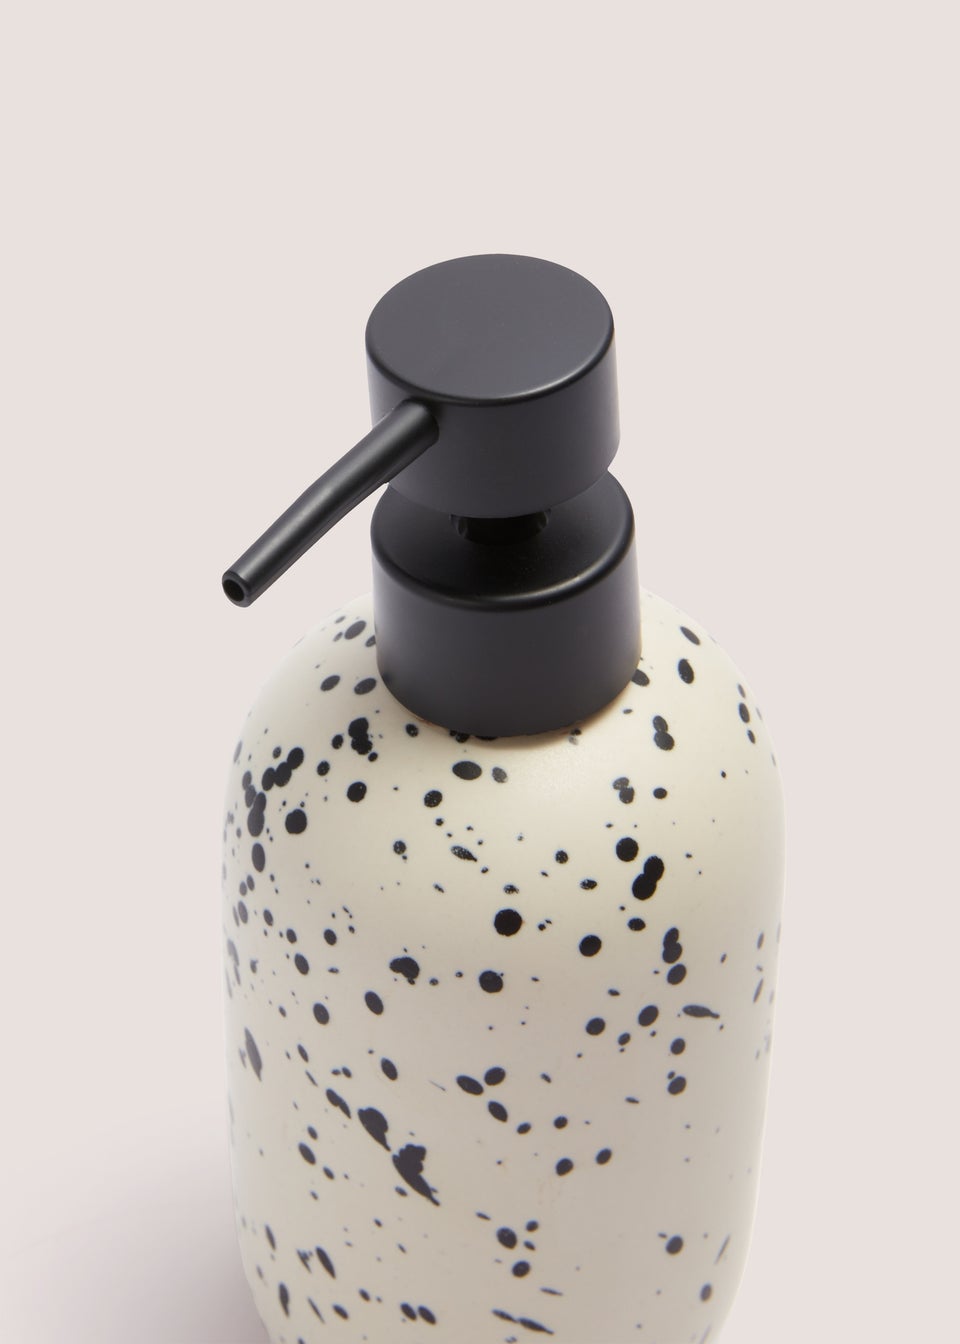 Cream Speckle Soap Dispenser (9x9x11cm)